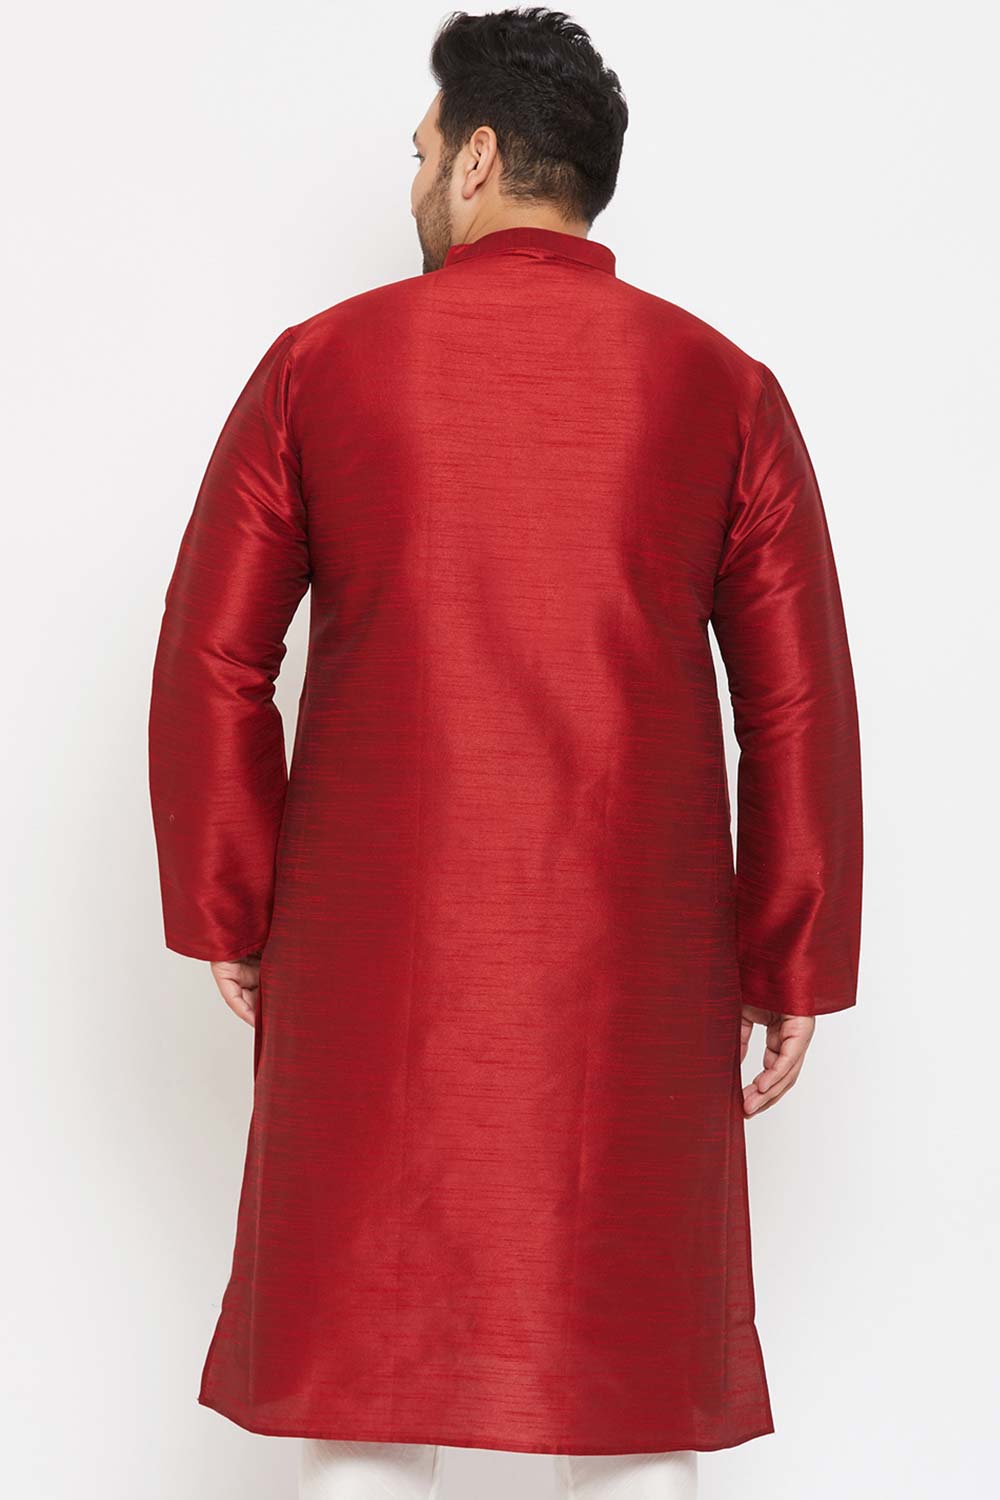 Buy Men's Silk Blend Solid Kurta in Maroon - Back